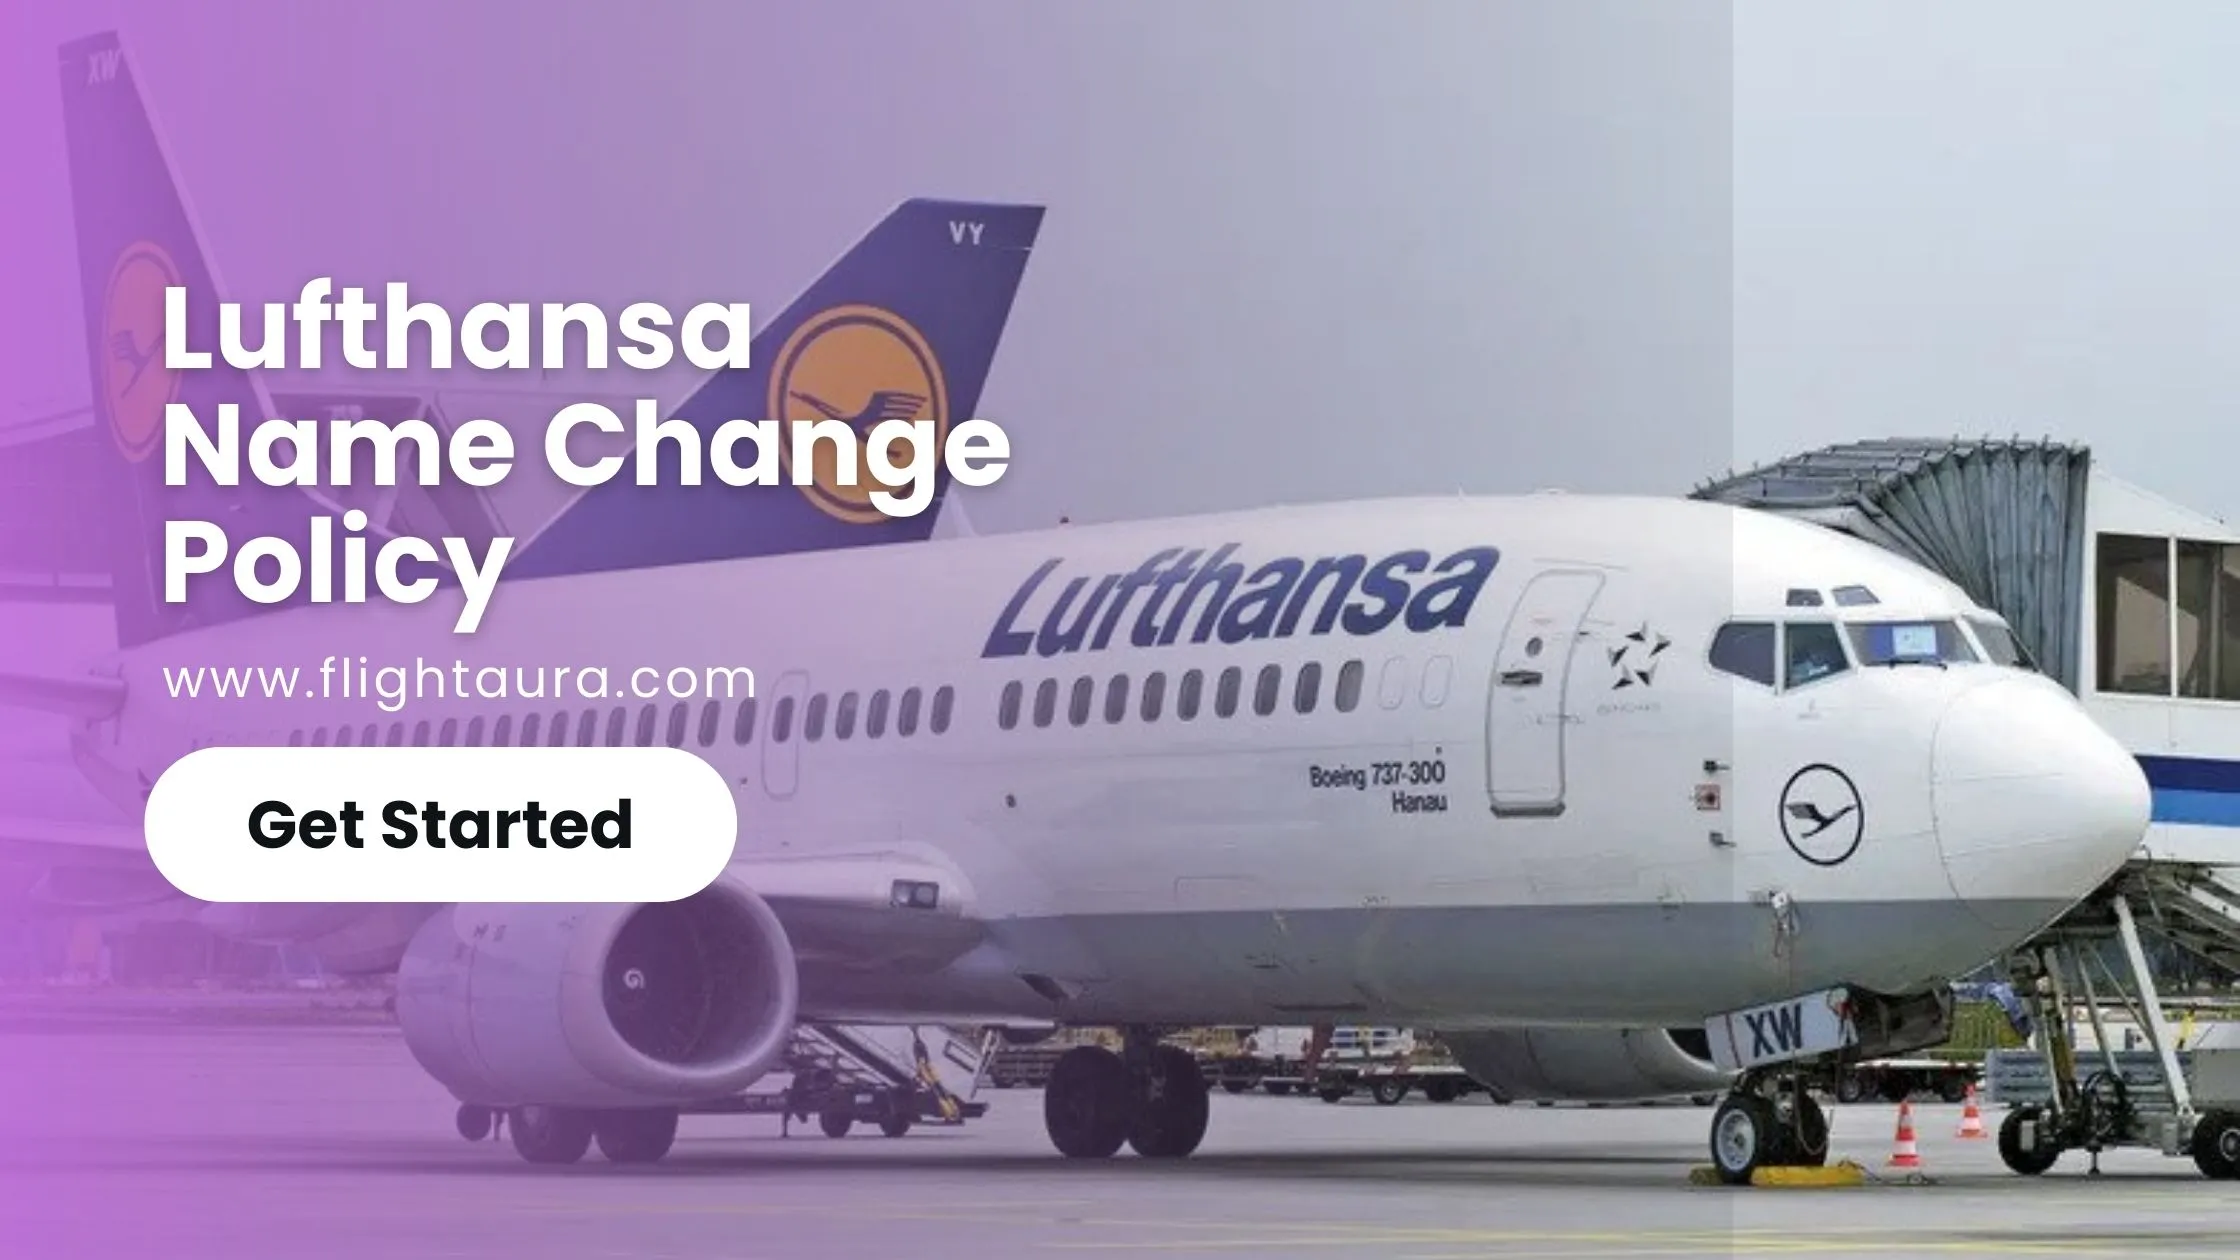 Lufthansa Name Change Policy